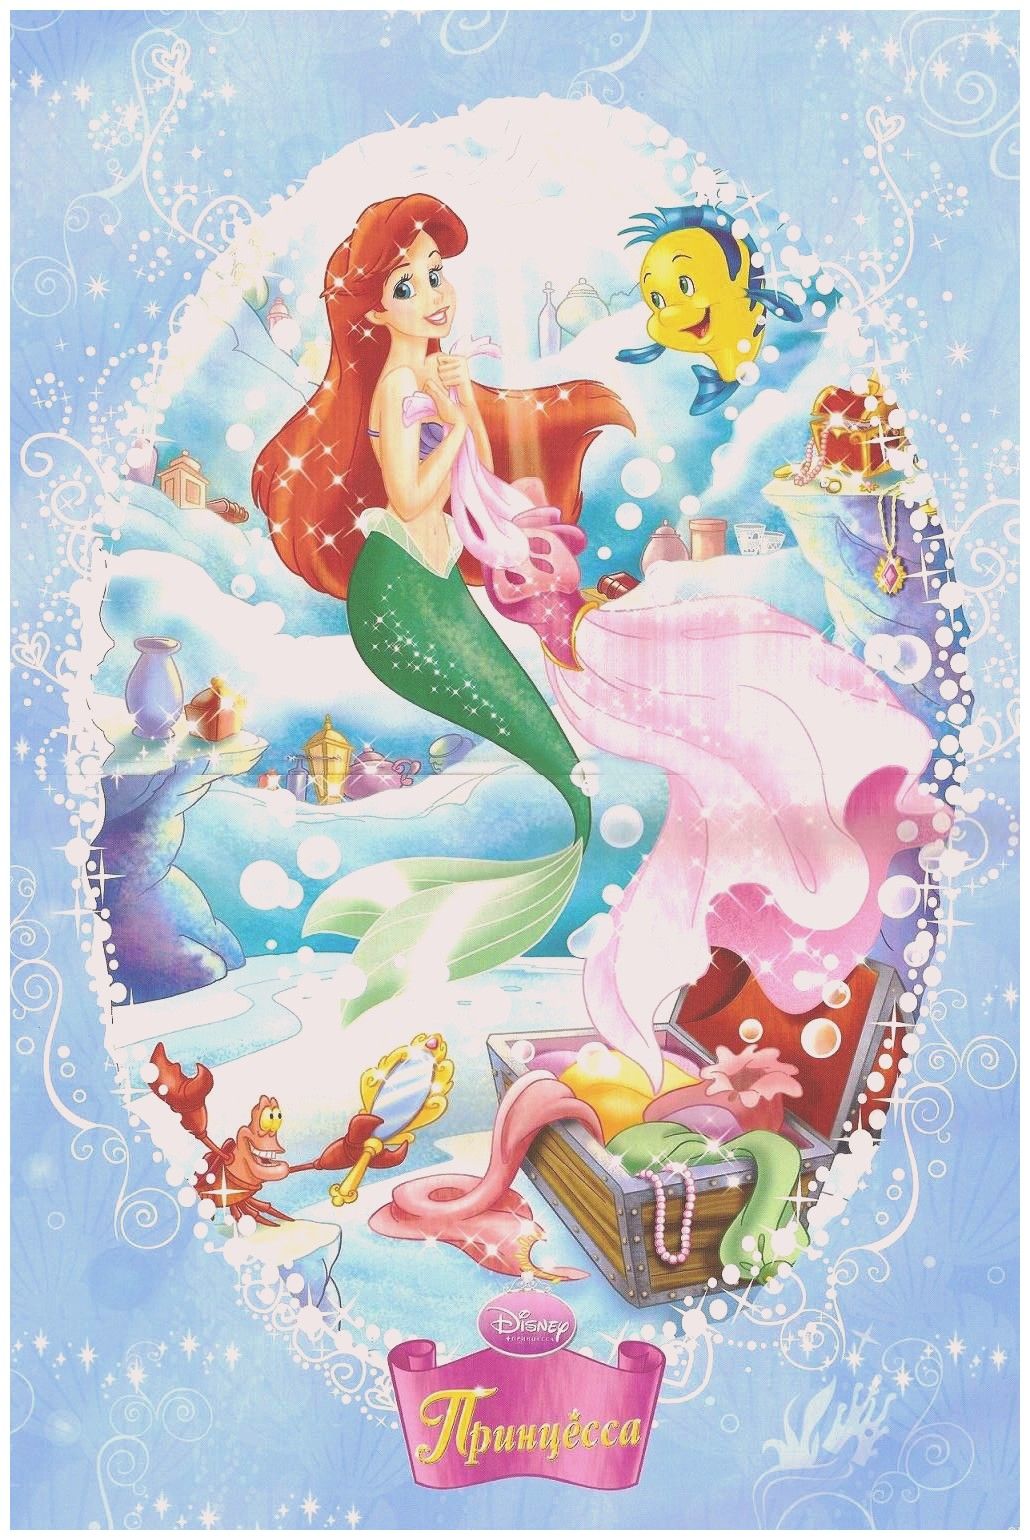 Princess Ariel Wallpaper